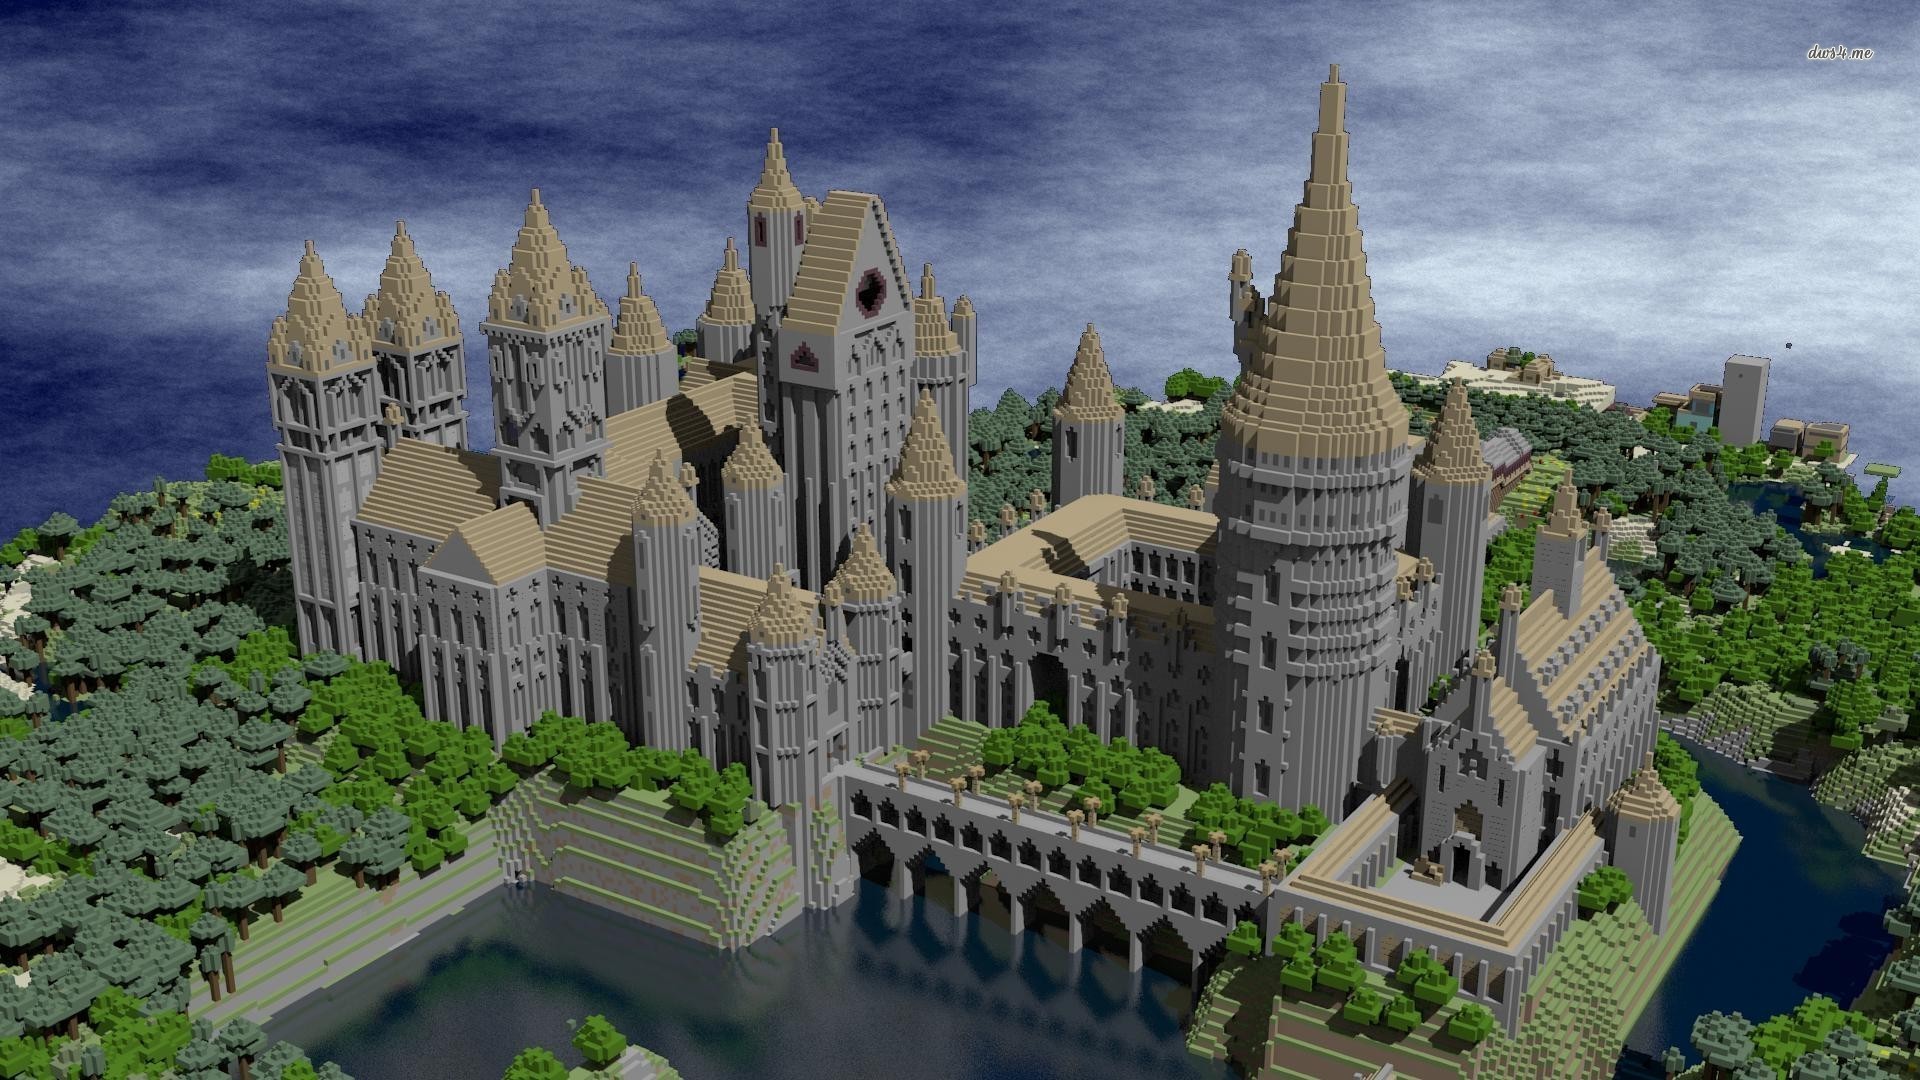 1920x1080 Hogwarts castle - Minecraft Game HD desktop wallpaper, Minecraft wallpaper  - Games no.